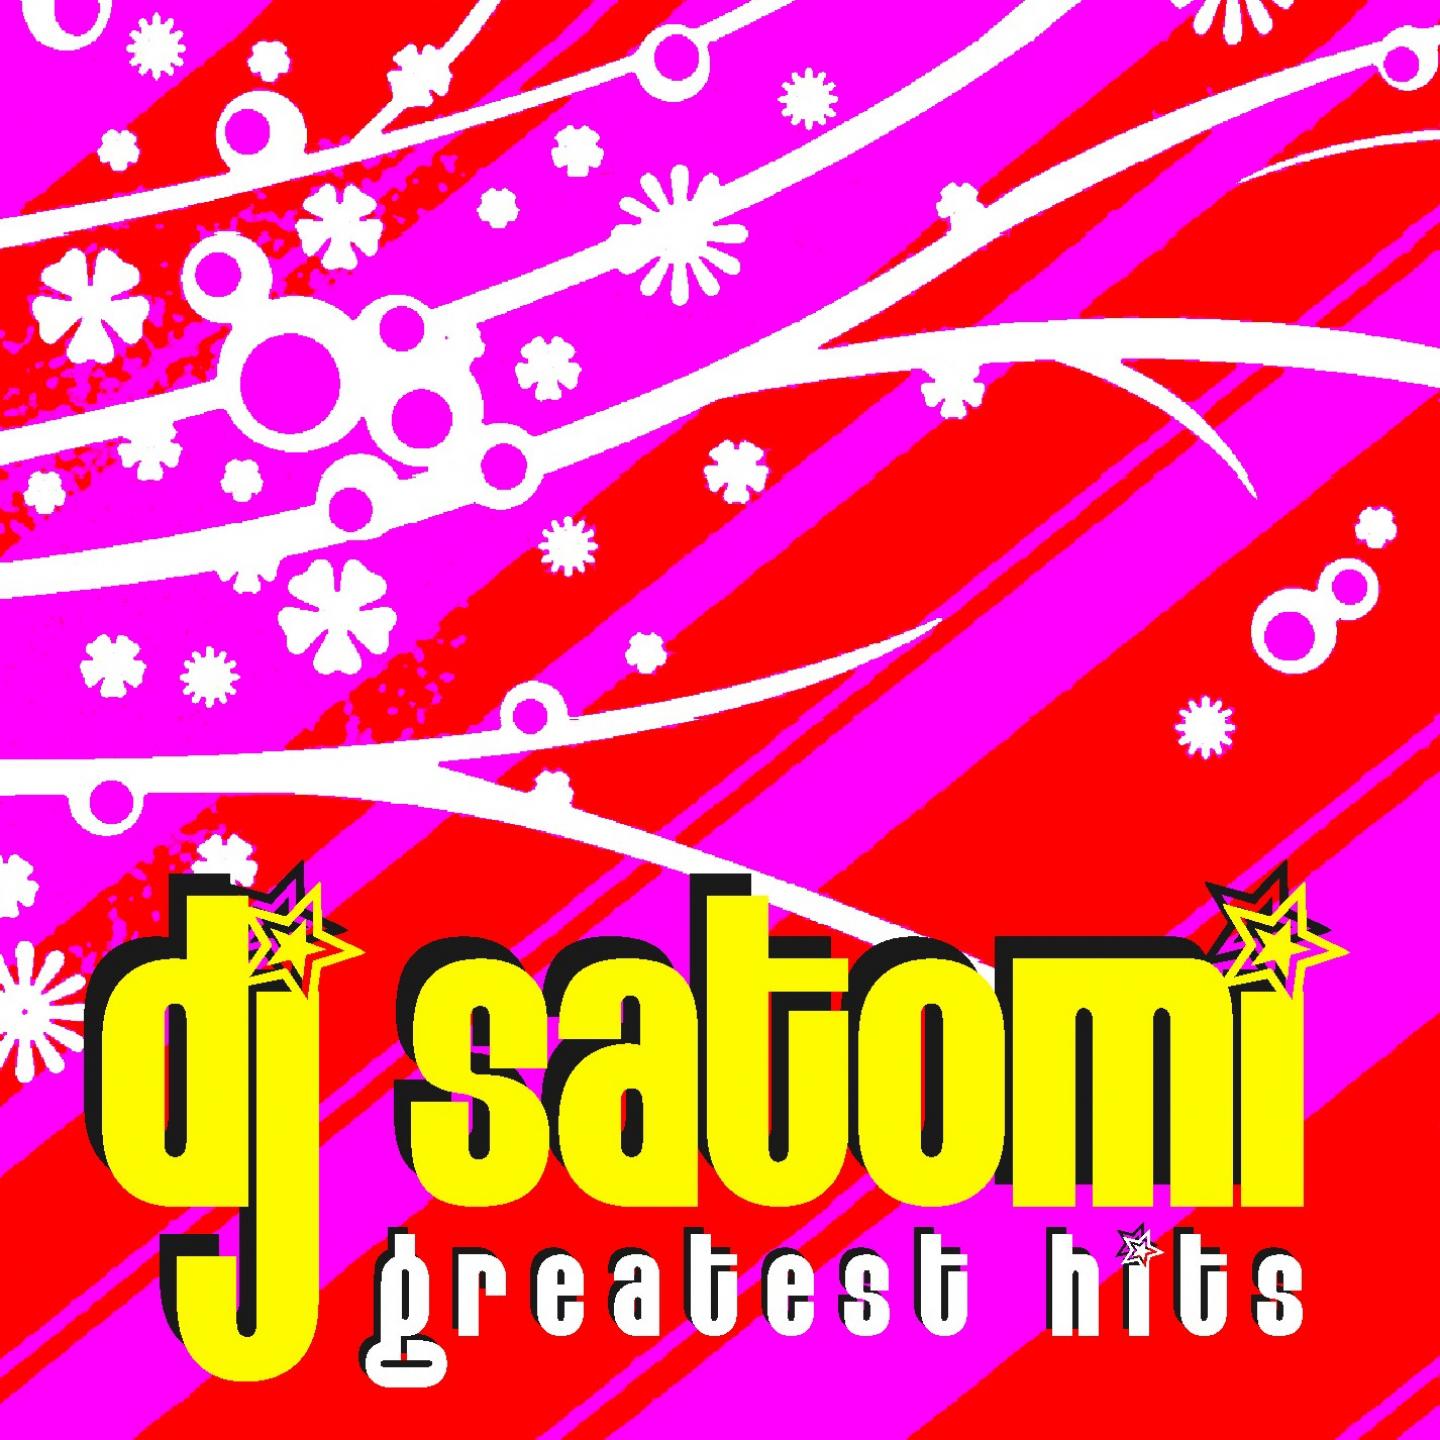 Castle In The Sky歌词 歌手Dj Satomi-专辑Greatest hits-单曲《Castle In The Sky》LRC歌词下载